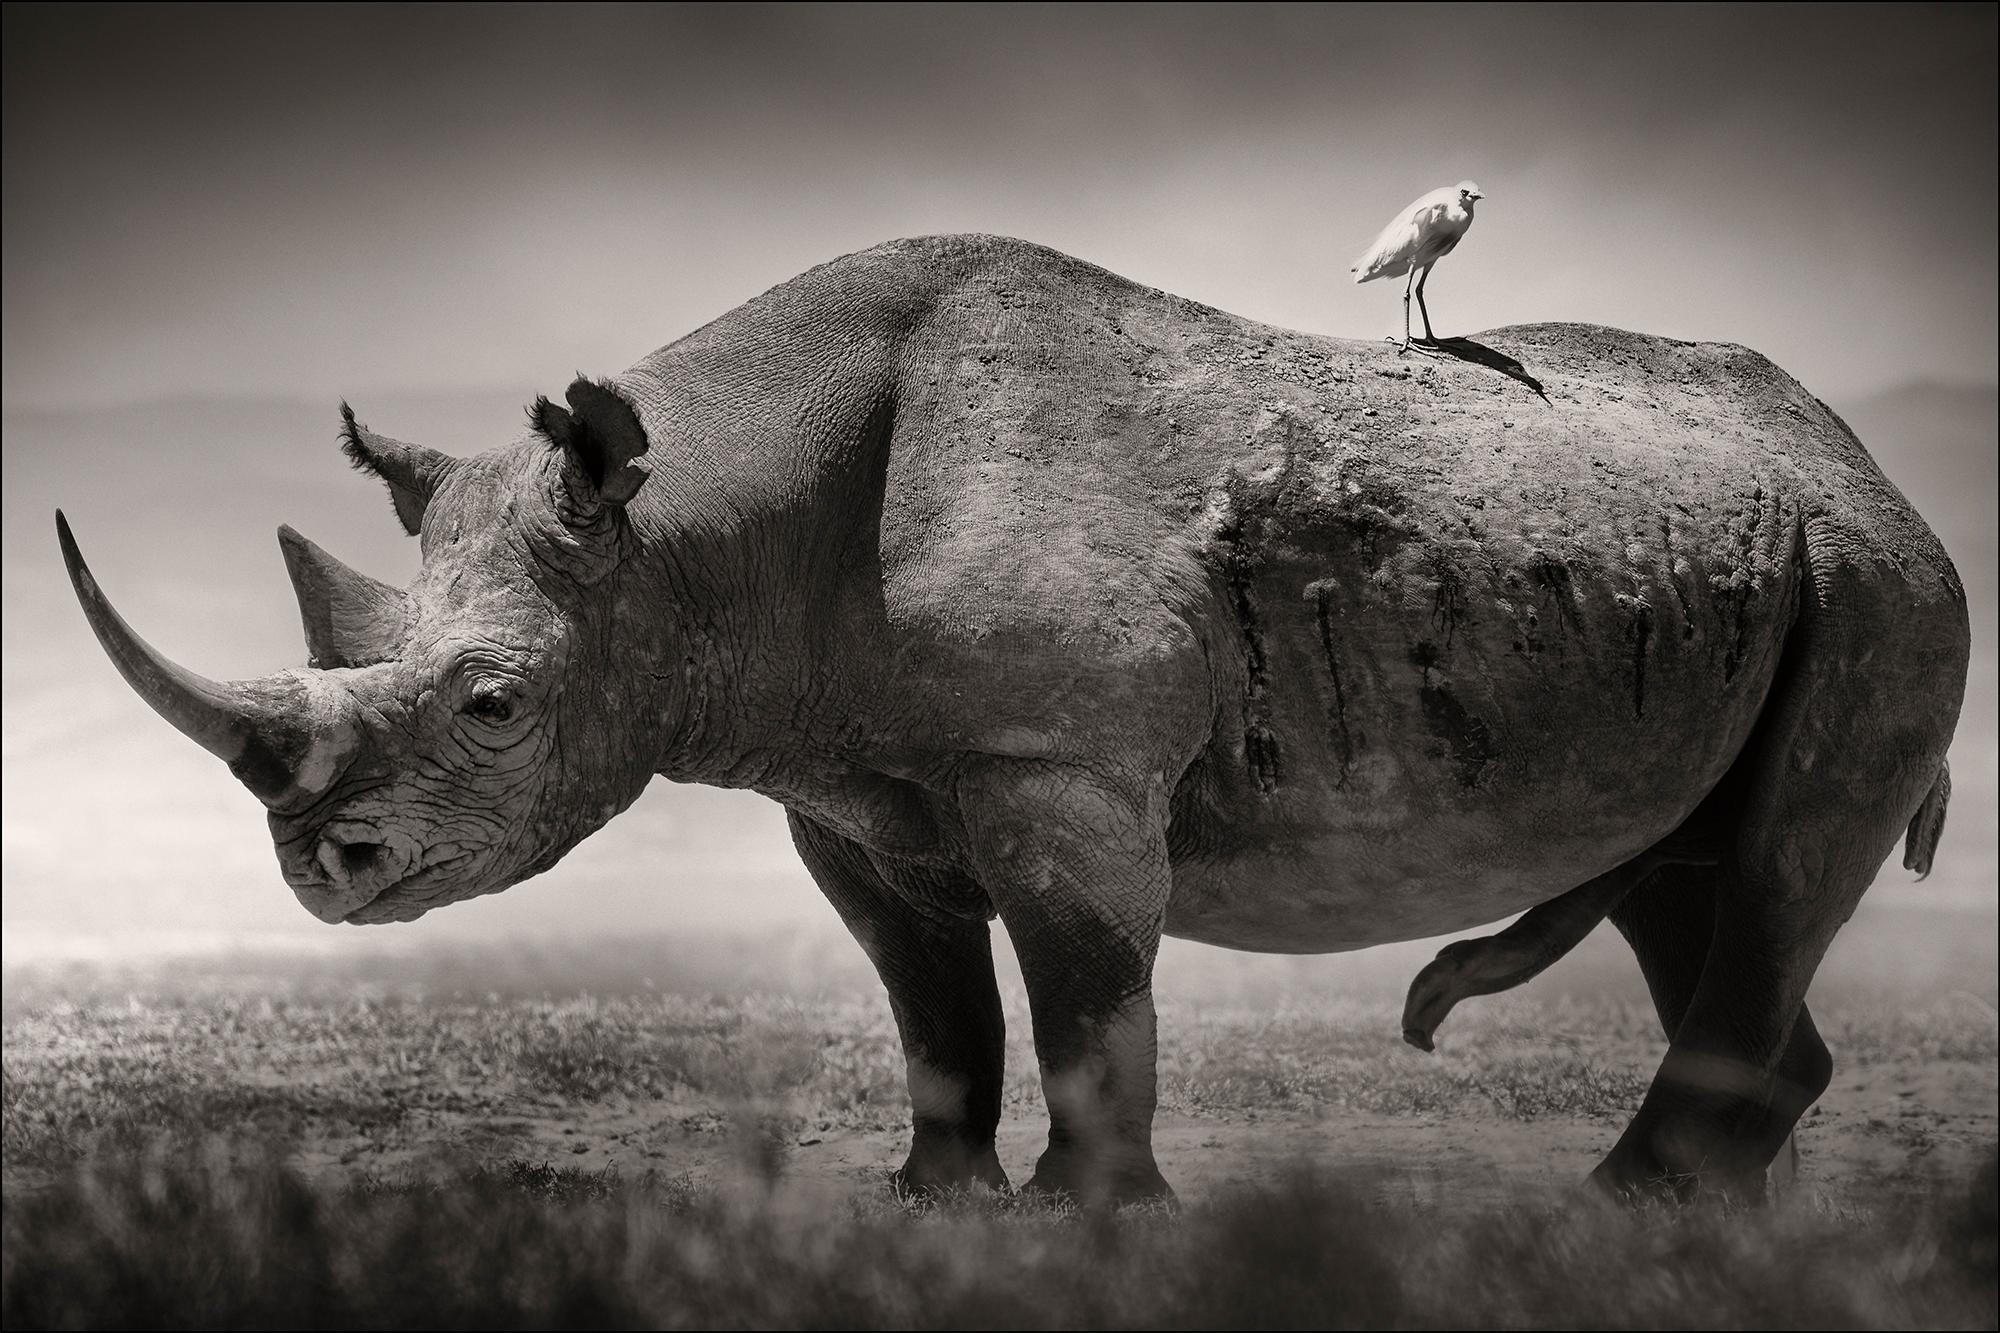 Joachim Schmeisser Landscape Photograph - Big male Black Rhino, africa, animal, wildlife, black and white photography